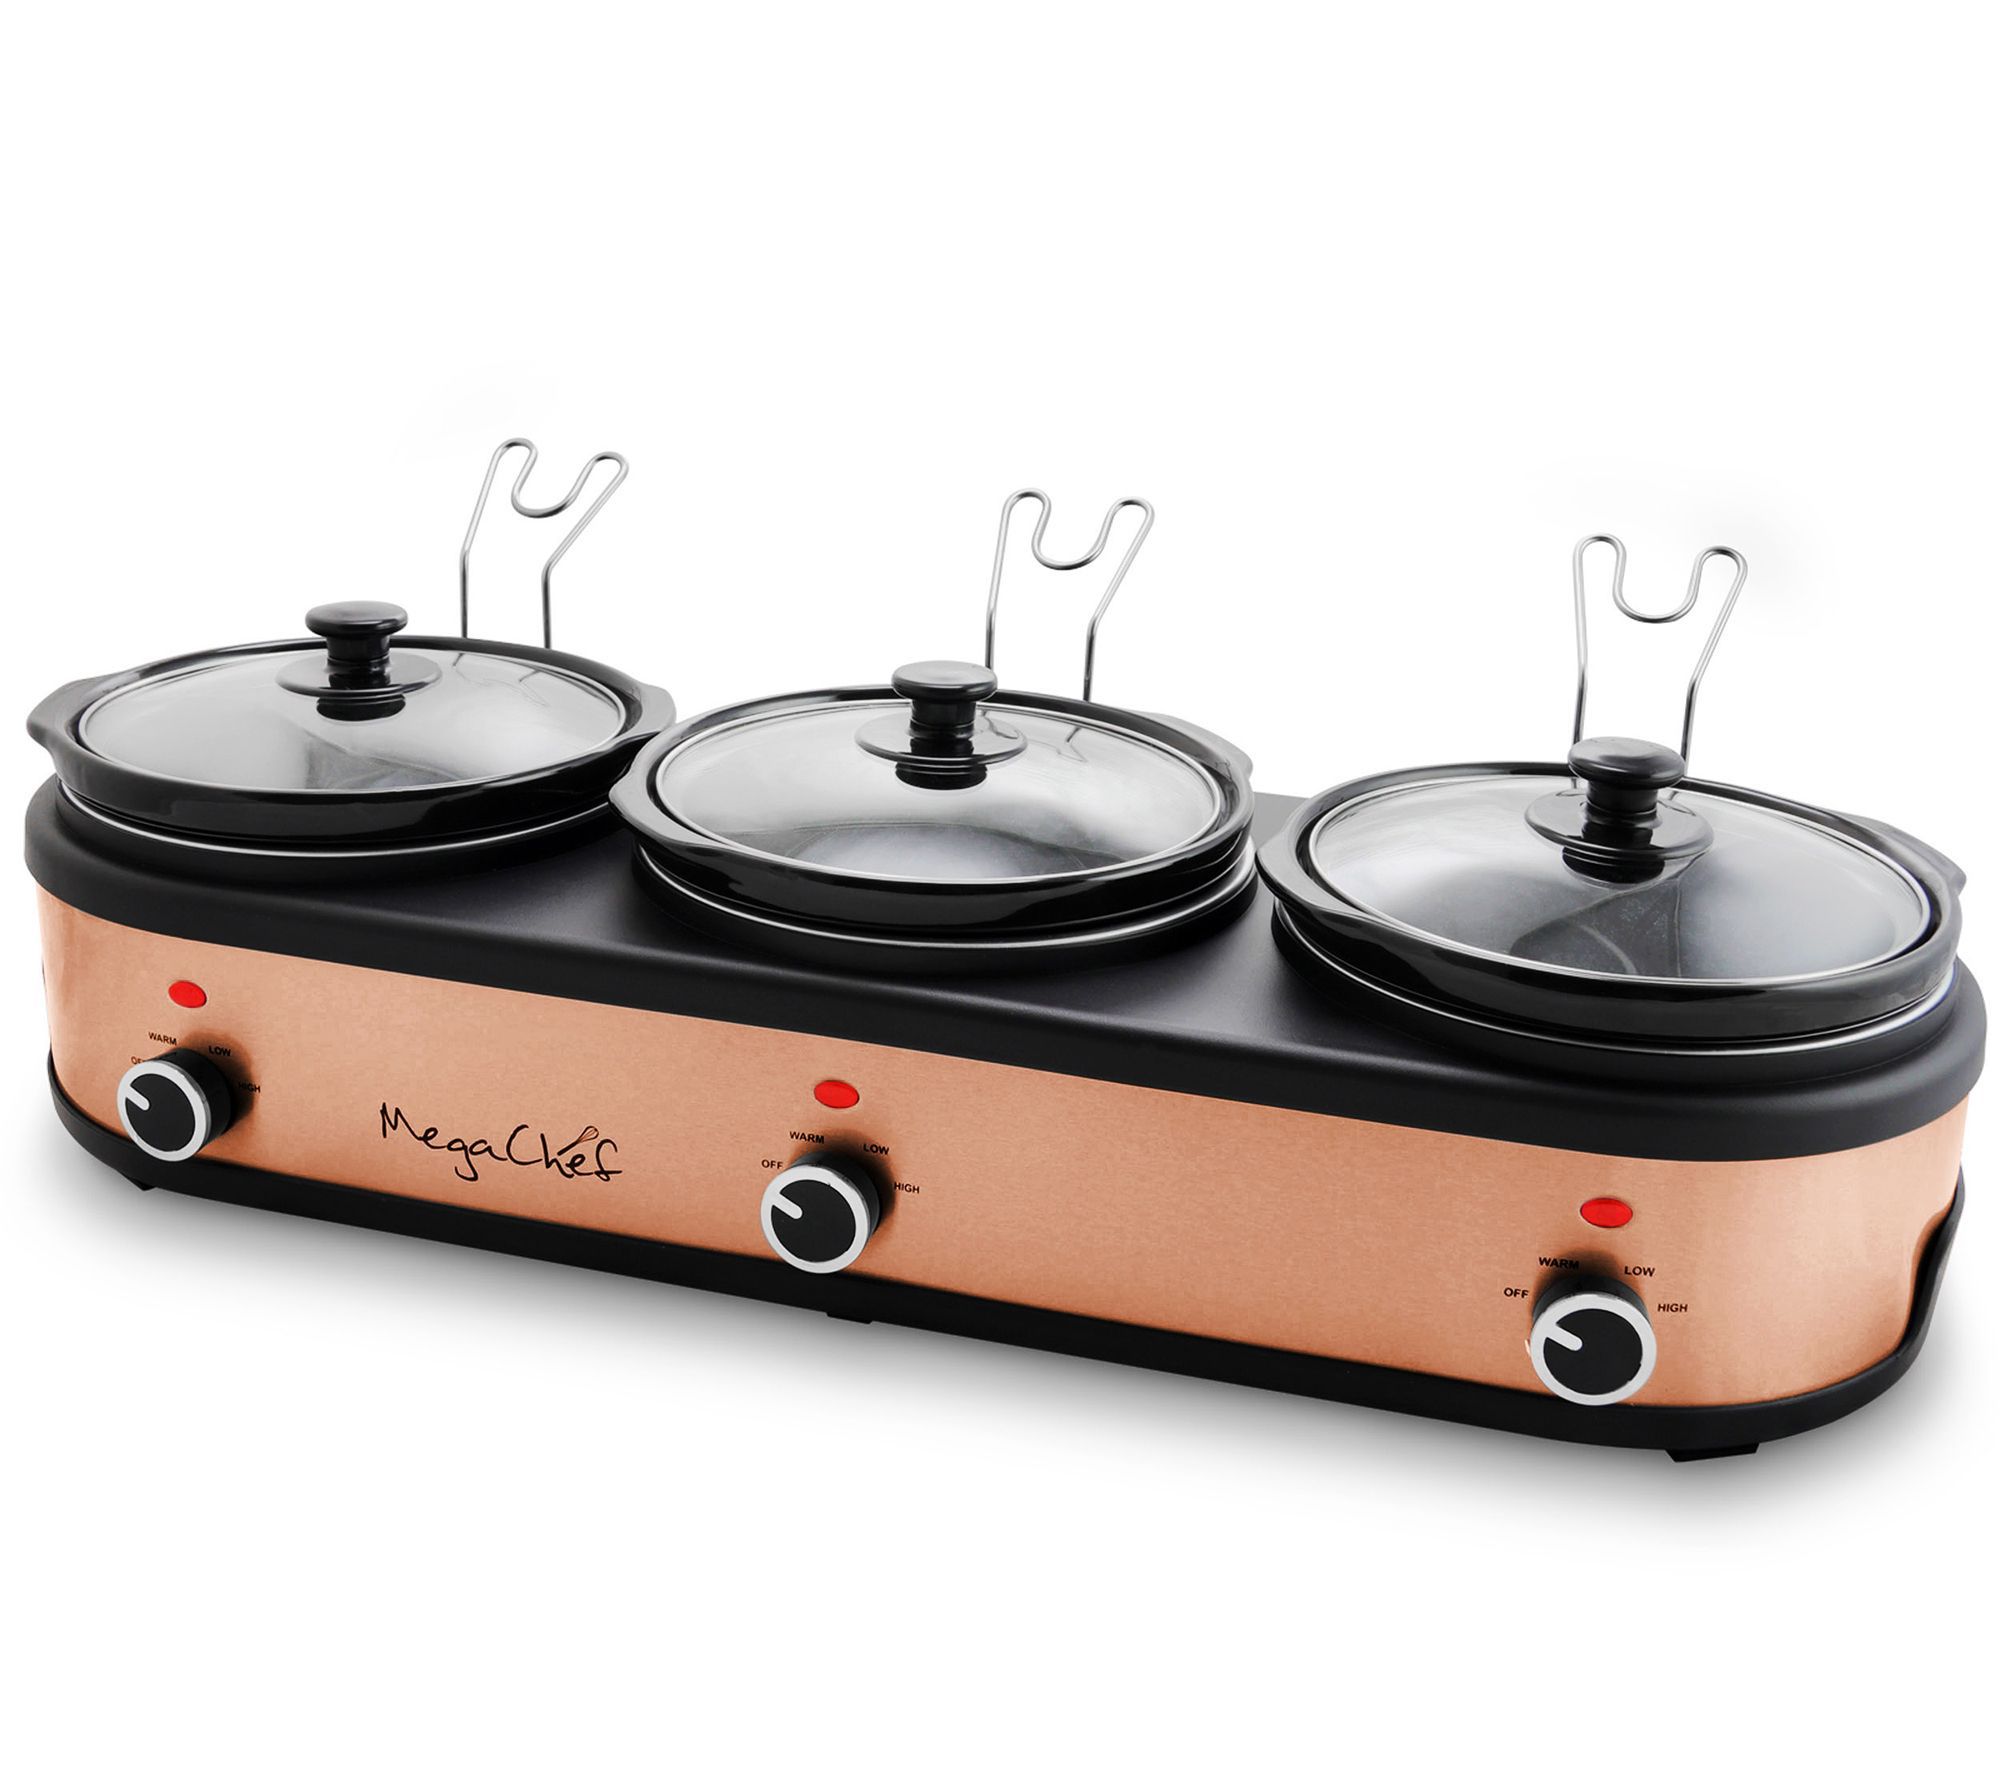 TRU Triple Slow Cooker Crock Pot Buffet Server Set - 3 X 2.5 Quart Oval  Inserts for sale online